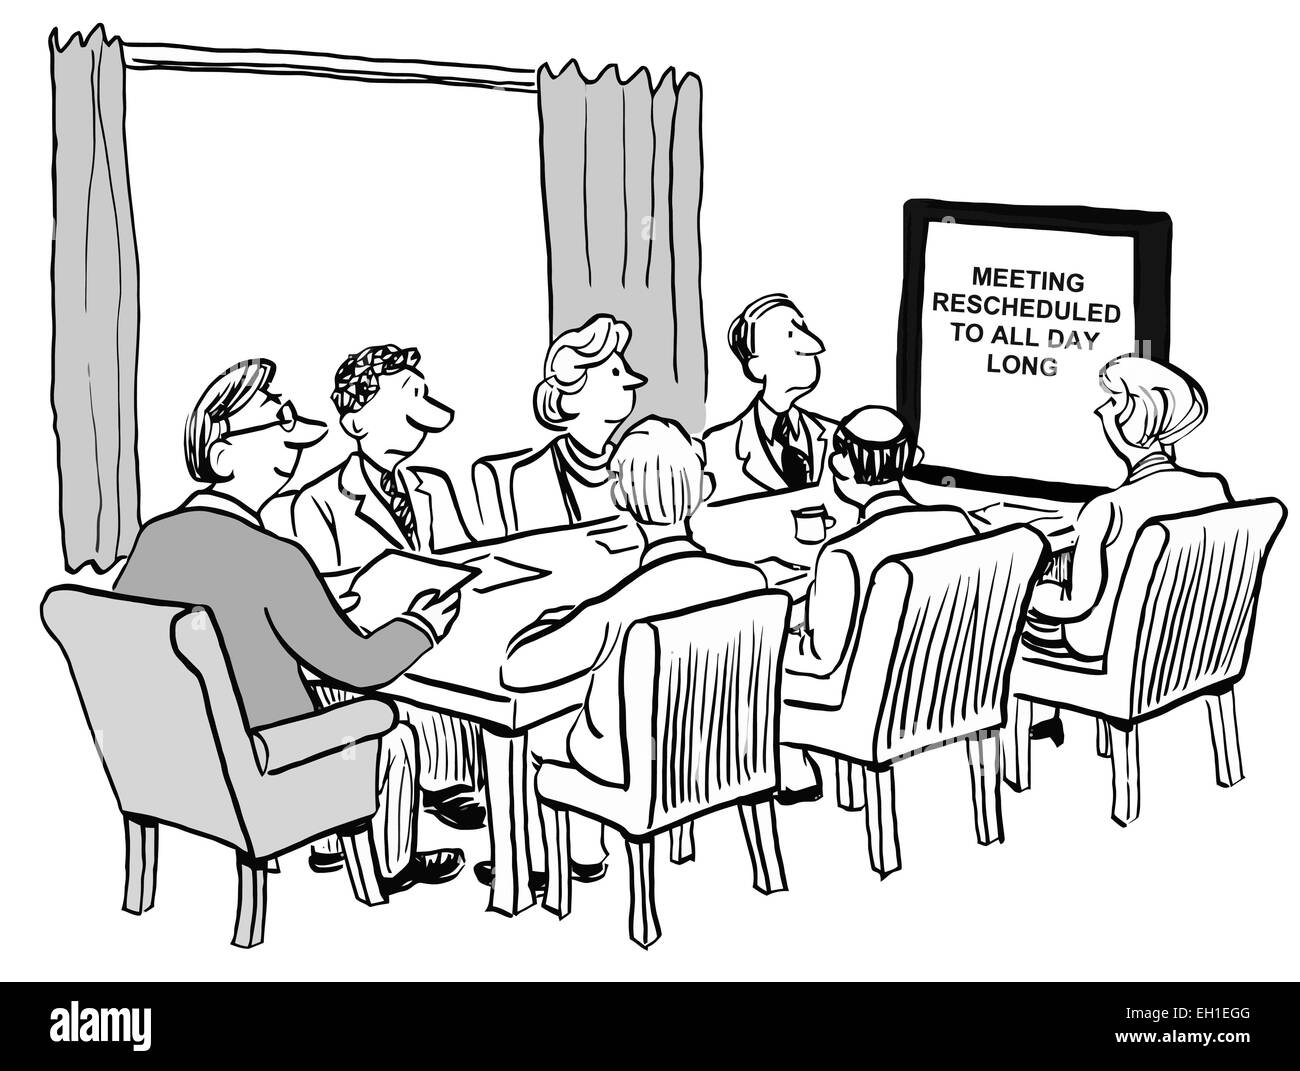 Karikatur von Business-Team-Meeting: Sitzung verschoben, den ganzen Tag. Stock Vektor